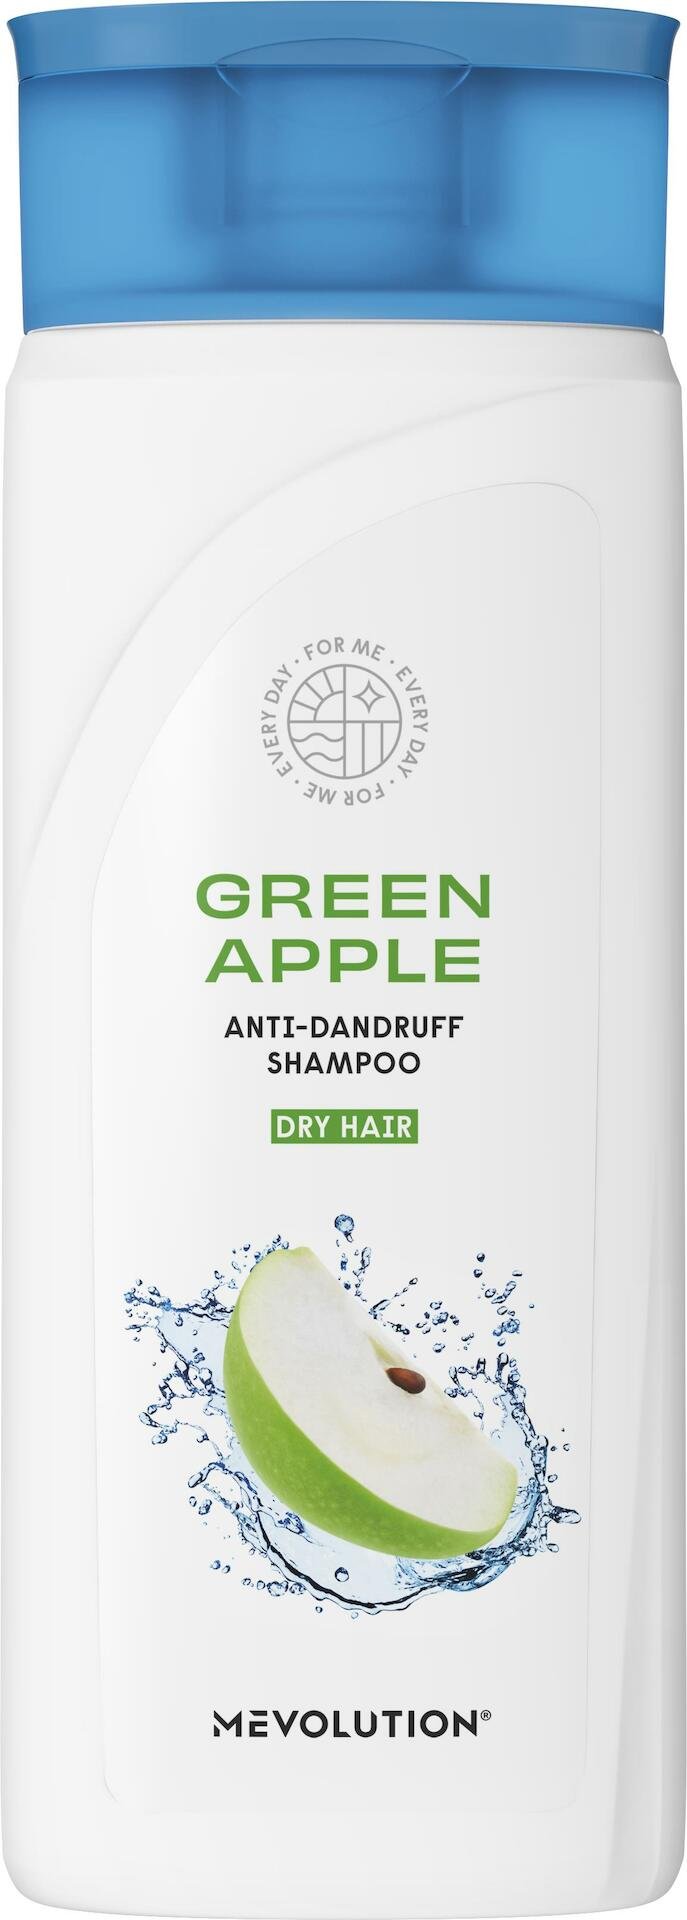 Mevolution Shampoo Dry Hair Green Apple 300 ml